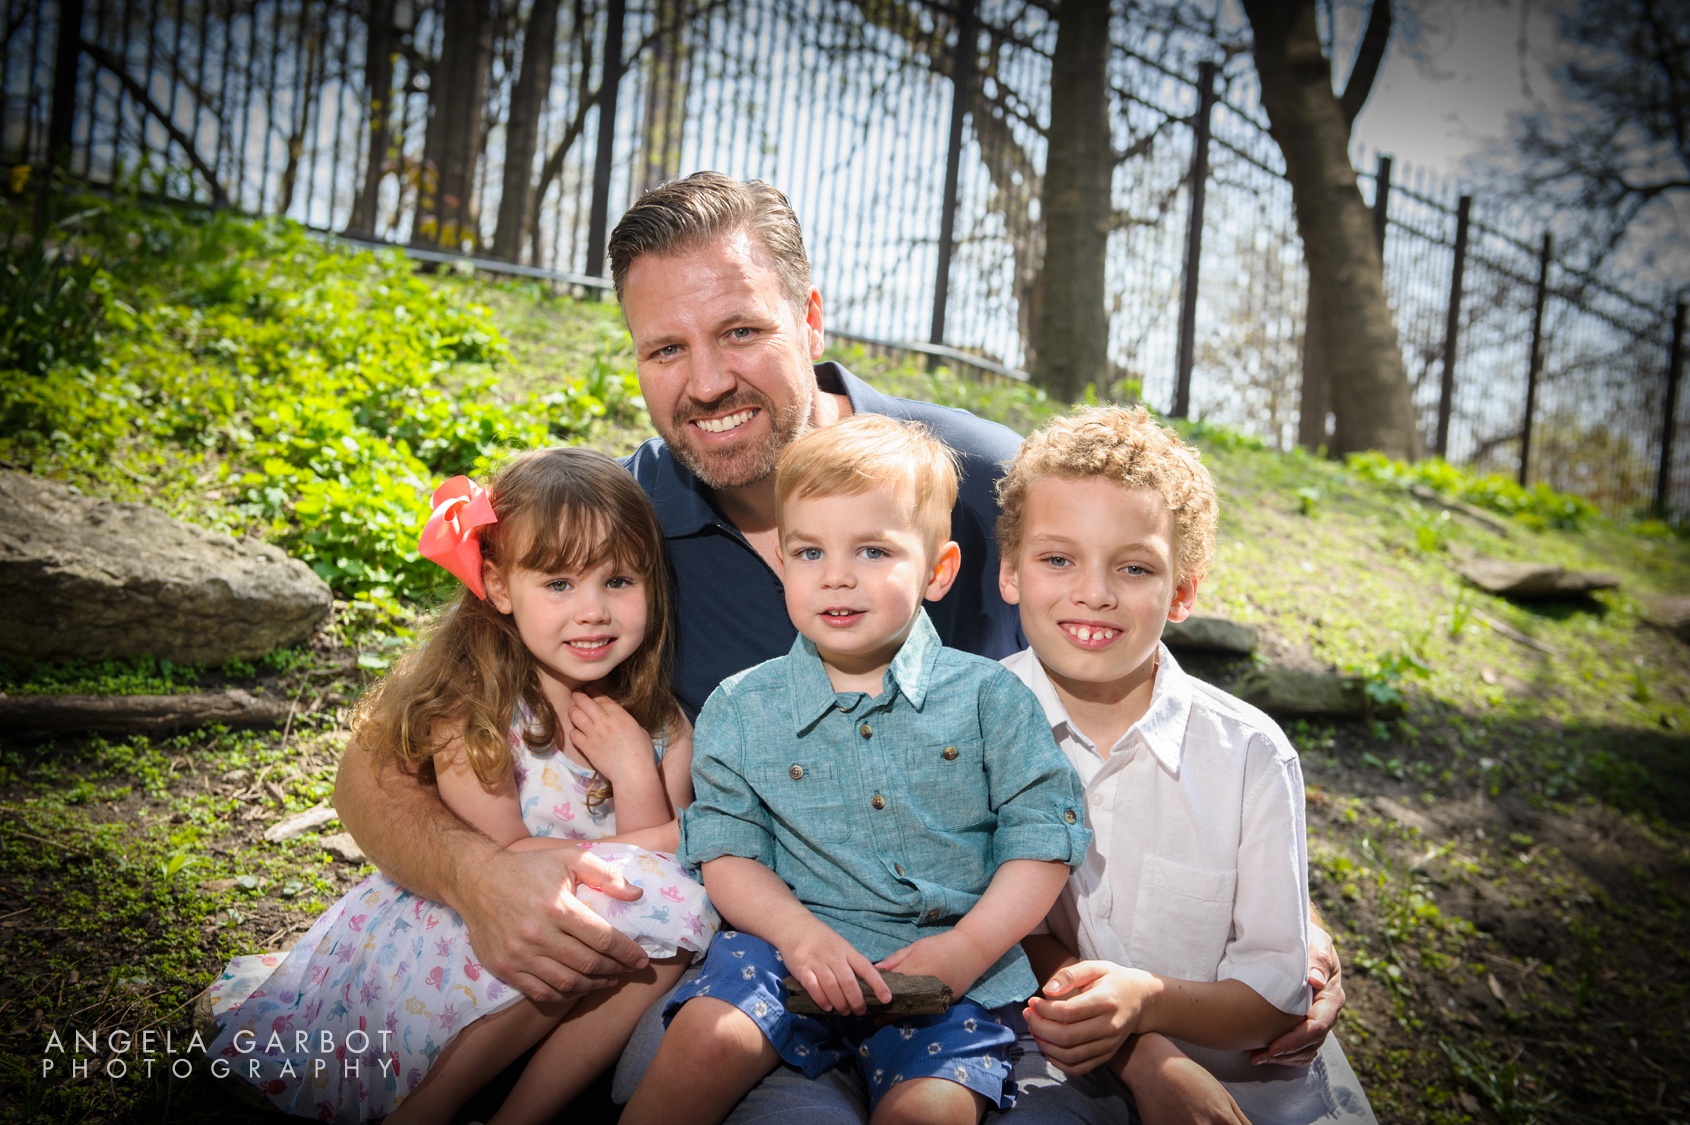 Father's Day 2016 #charlottefathersday #chicagofathersday #fathersday #lifestylefamilyphotography #charlottefamily #chicagofamily ©2016 Angela Garbot http://www.AngelaGarbot.com